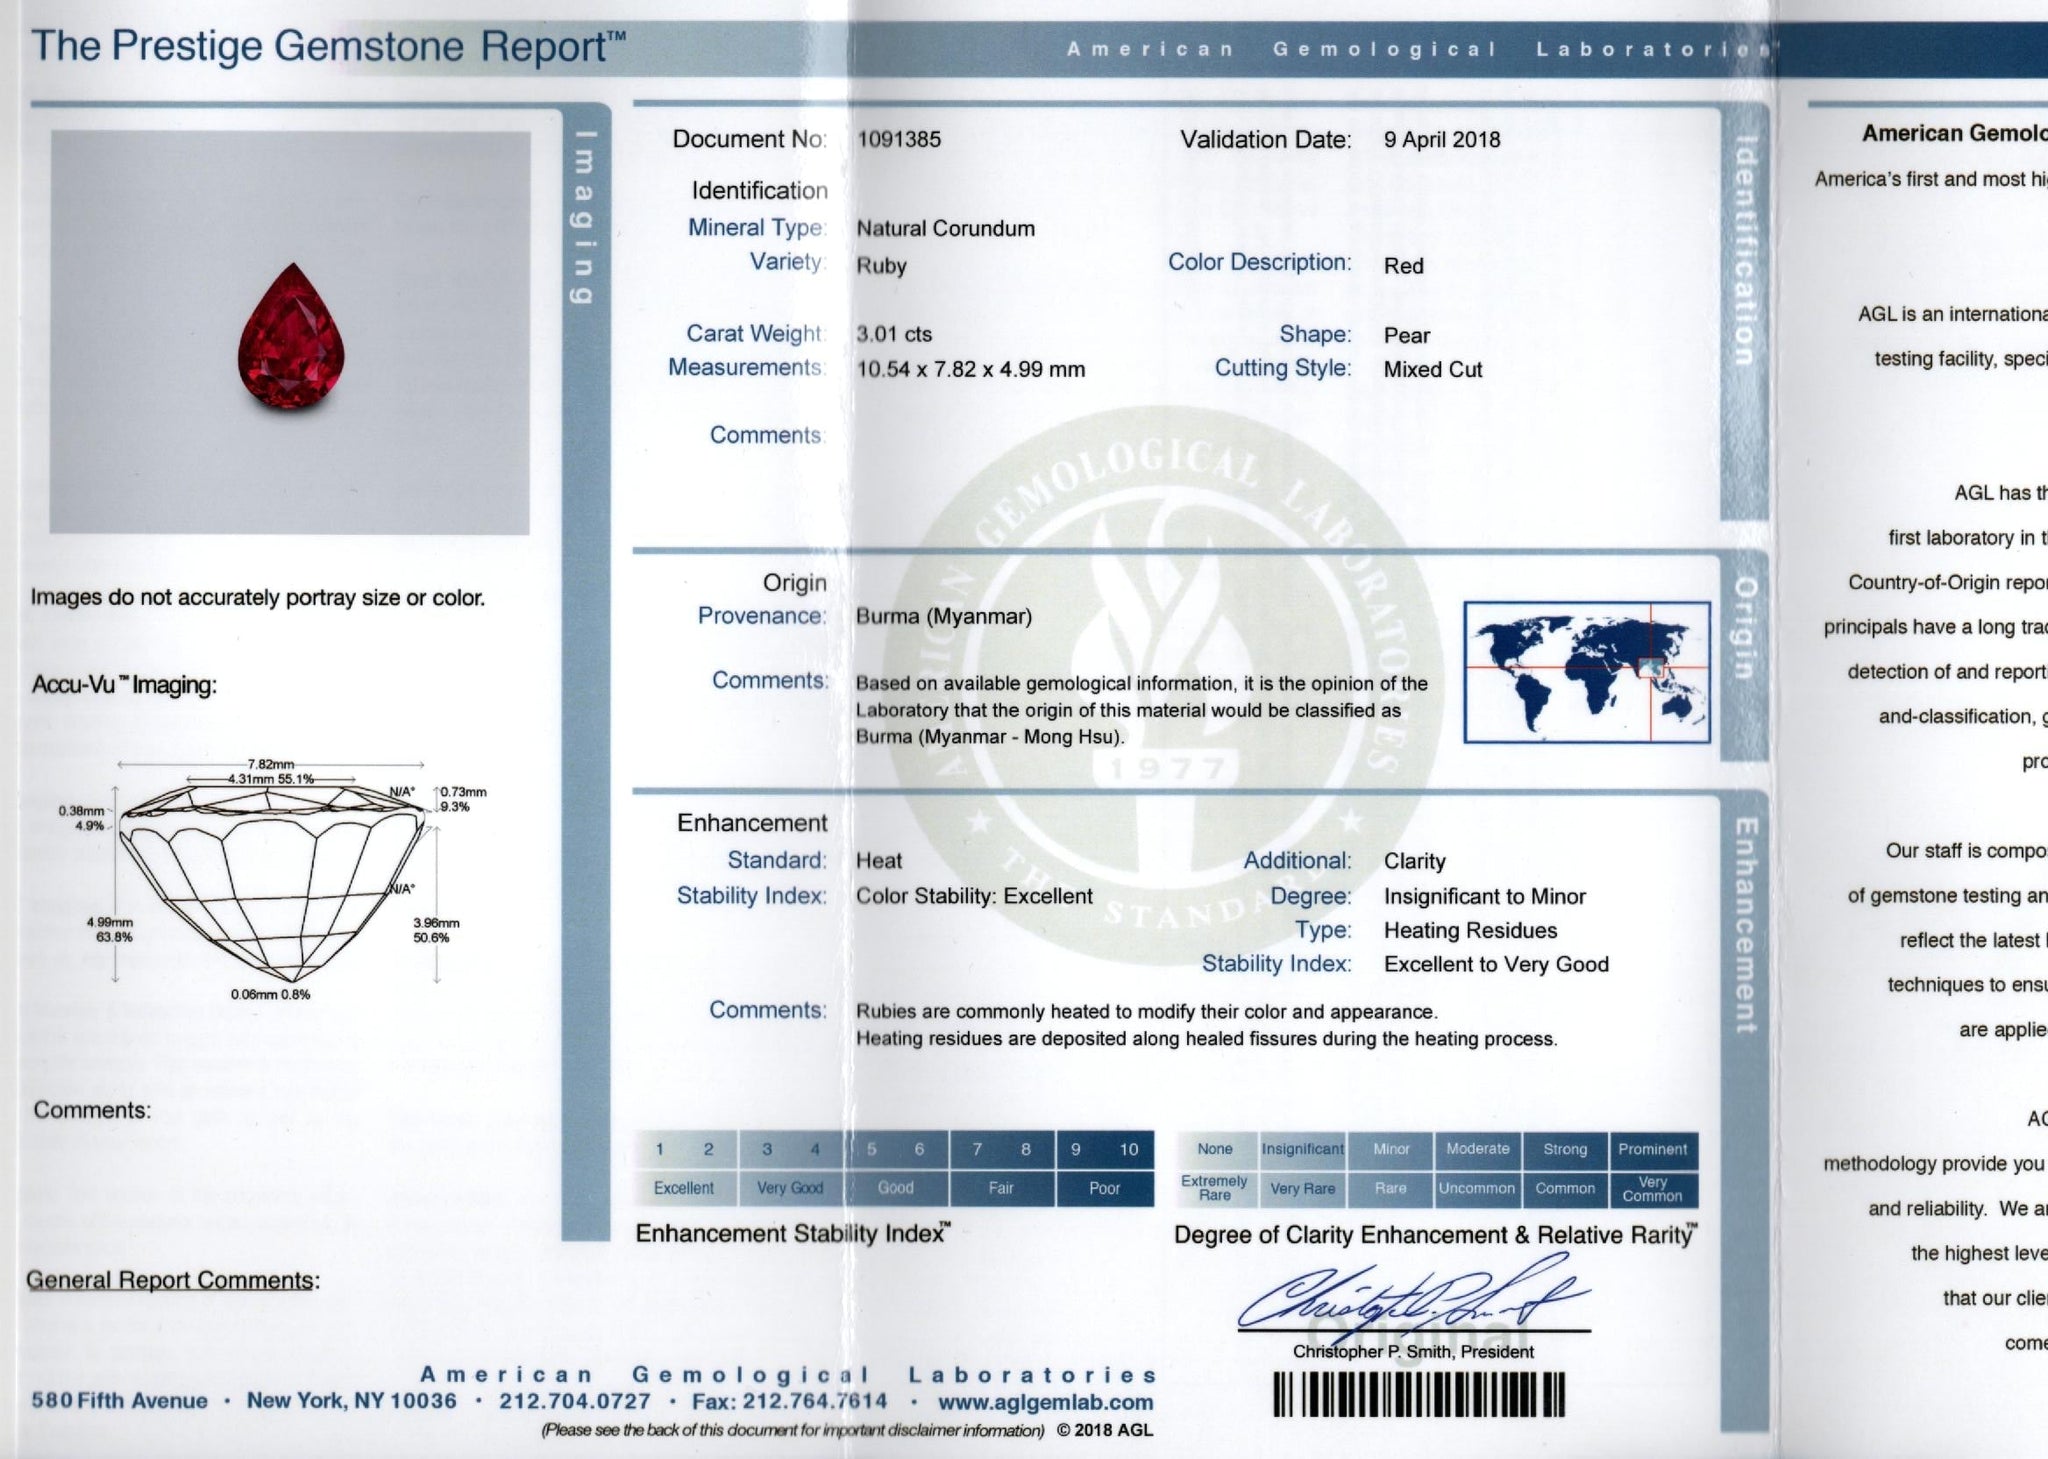 AGL Certified 22 Carat Pear Cut Burma Ruby and Diamond Chandelier Necklace